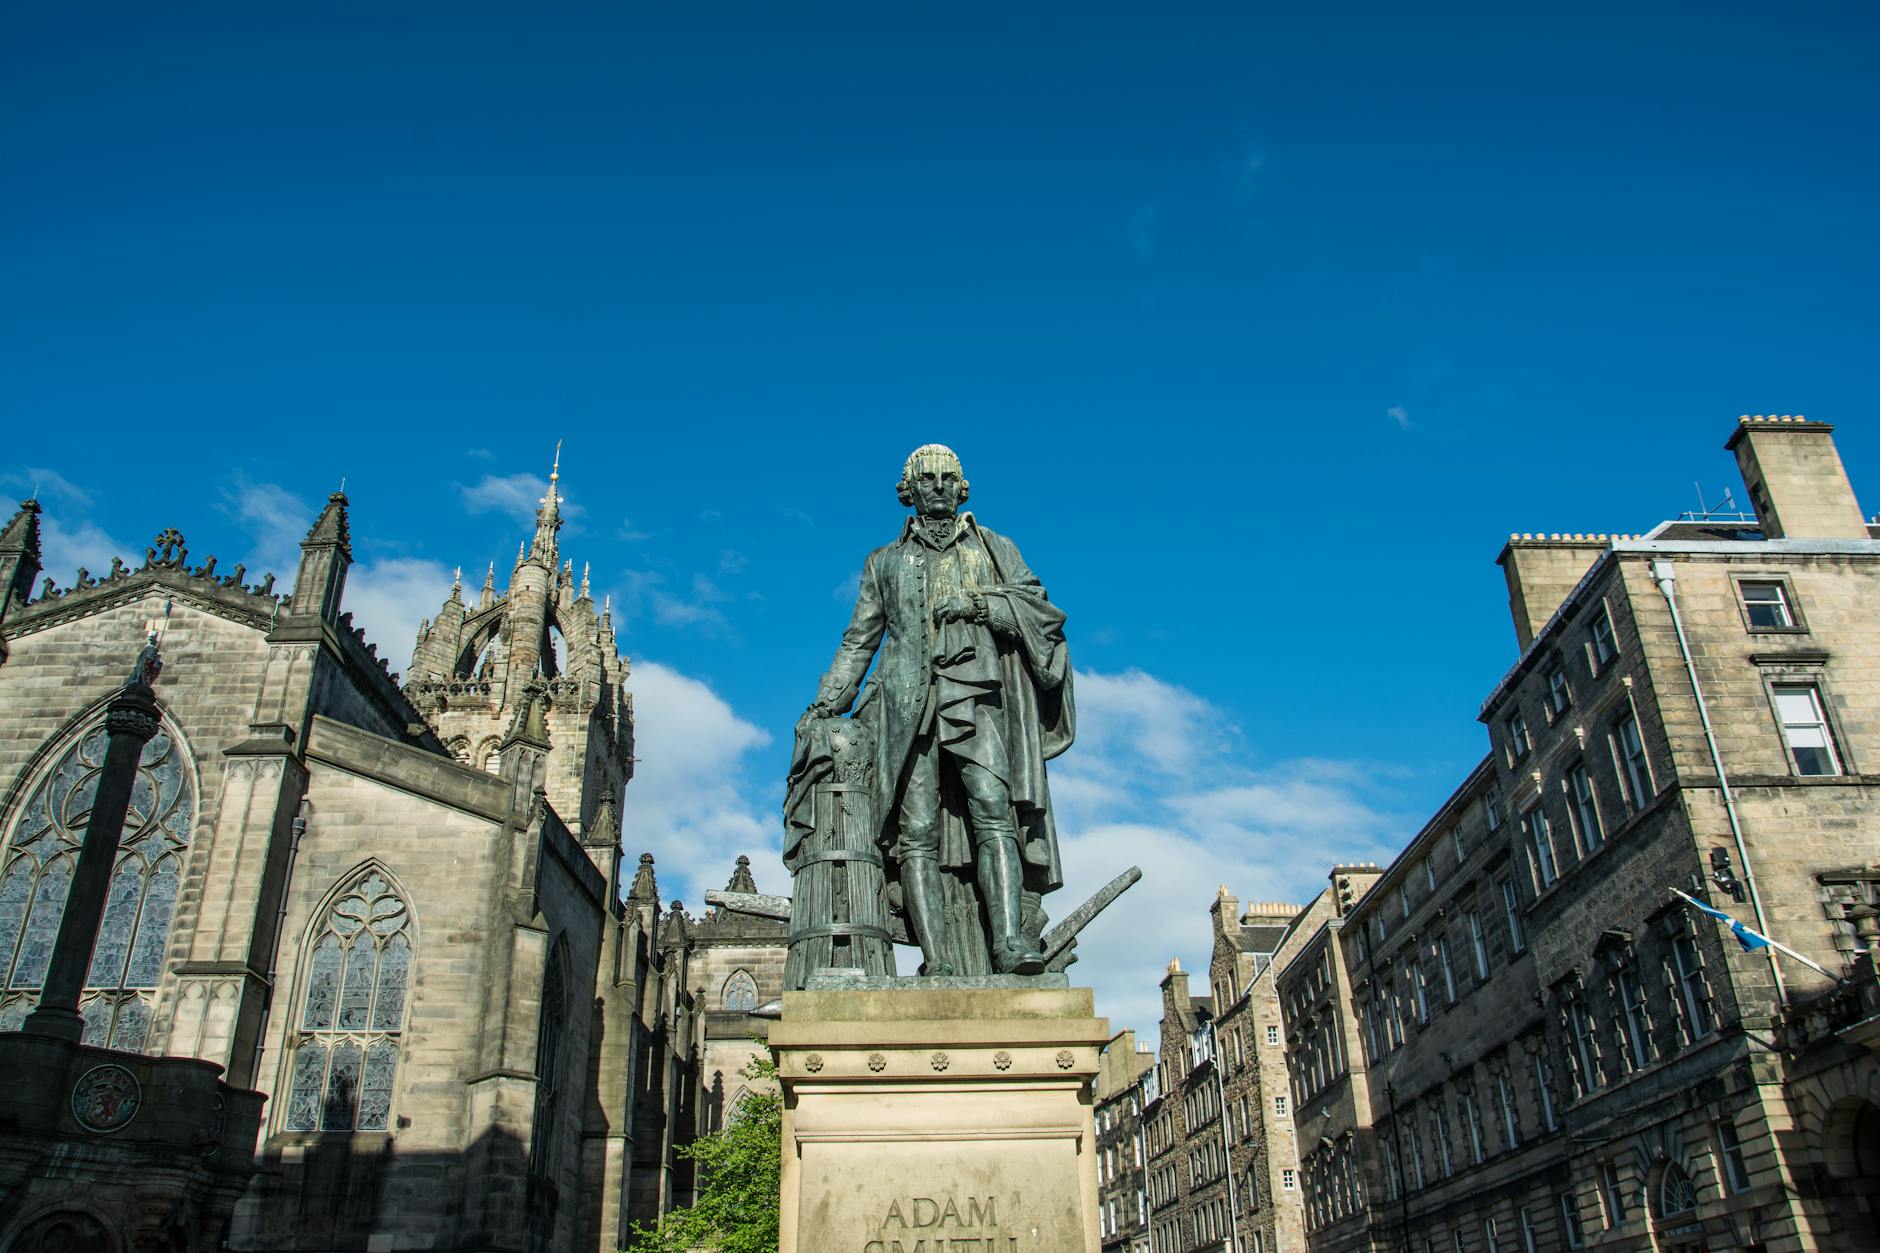 a man in coat statue near buildings under the blue sky